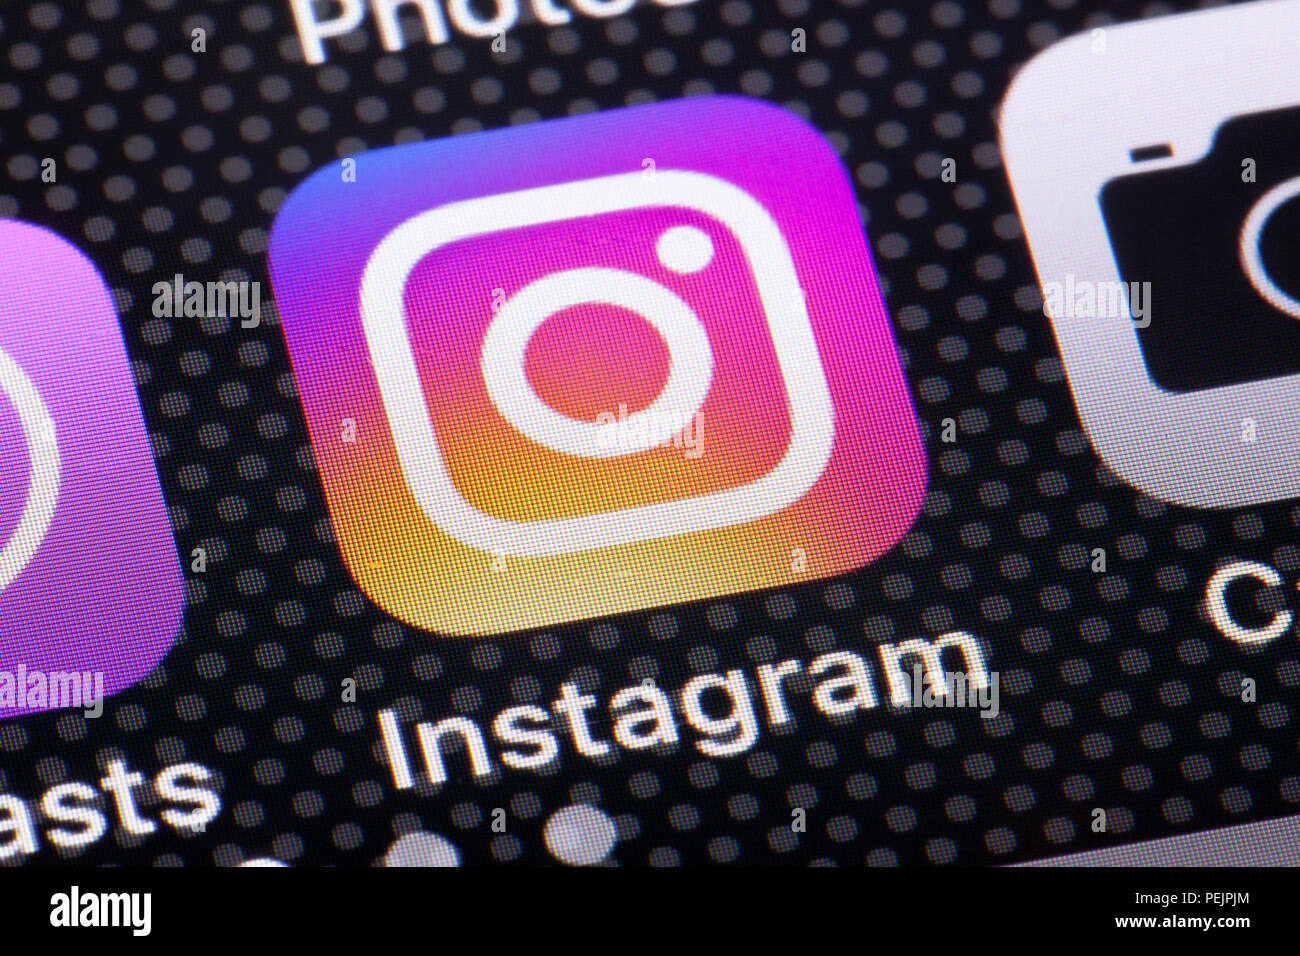 Instagram-app-Symbol auf dem iPhone Bildschirm - USA Stockfoto